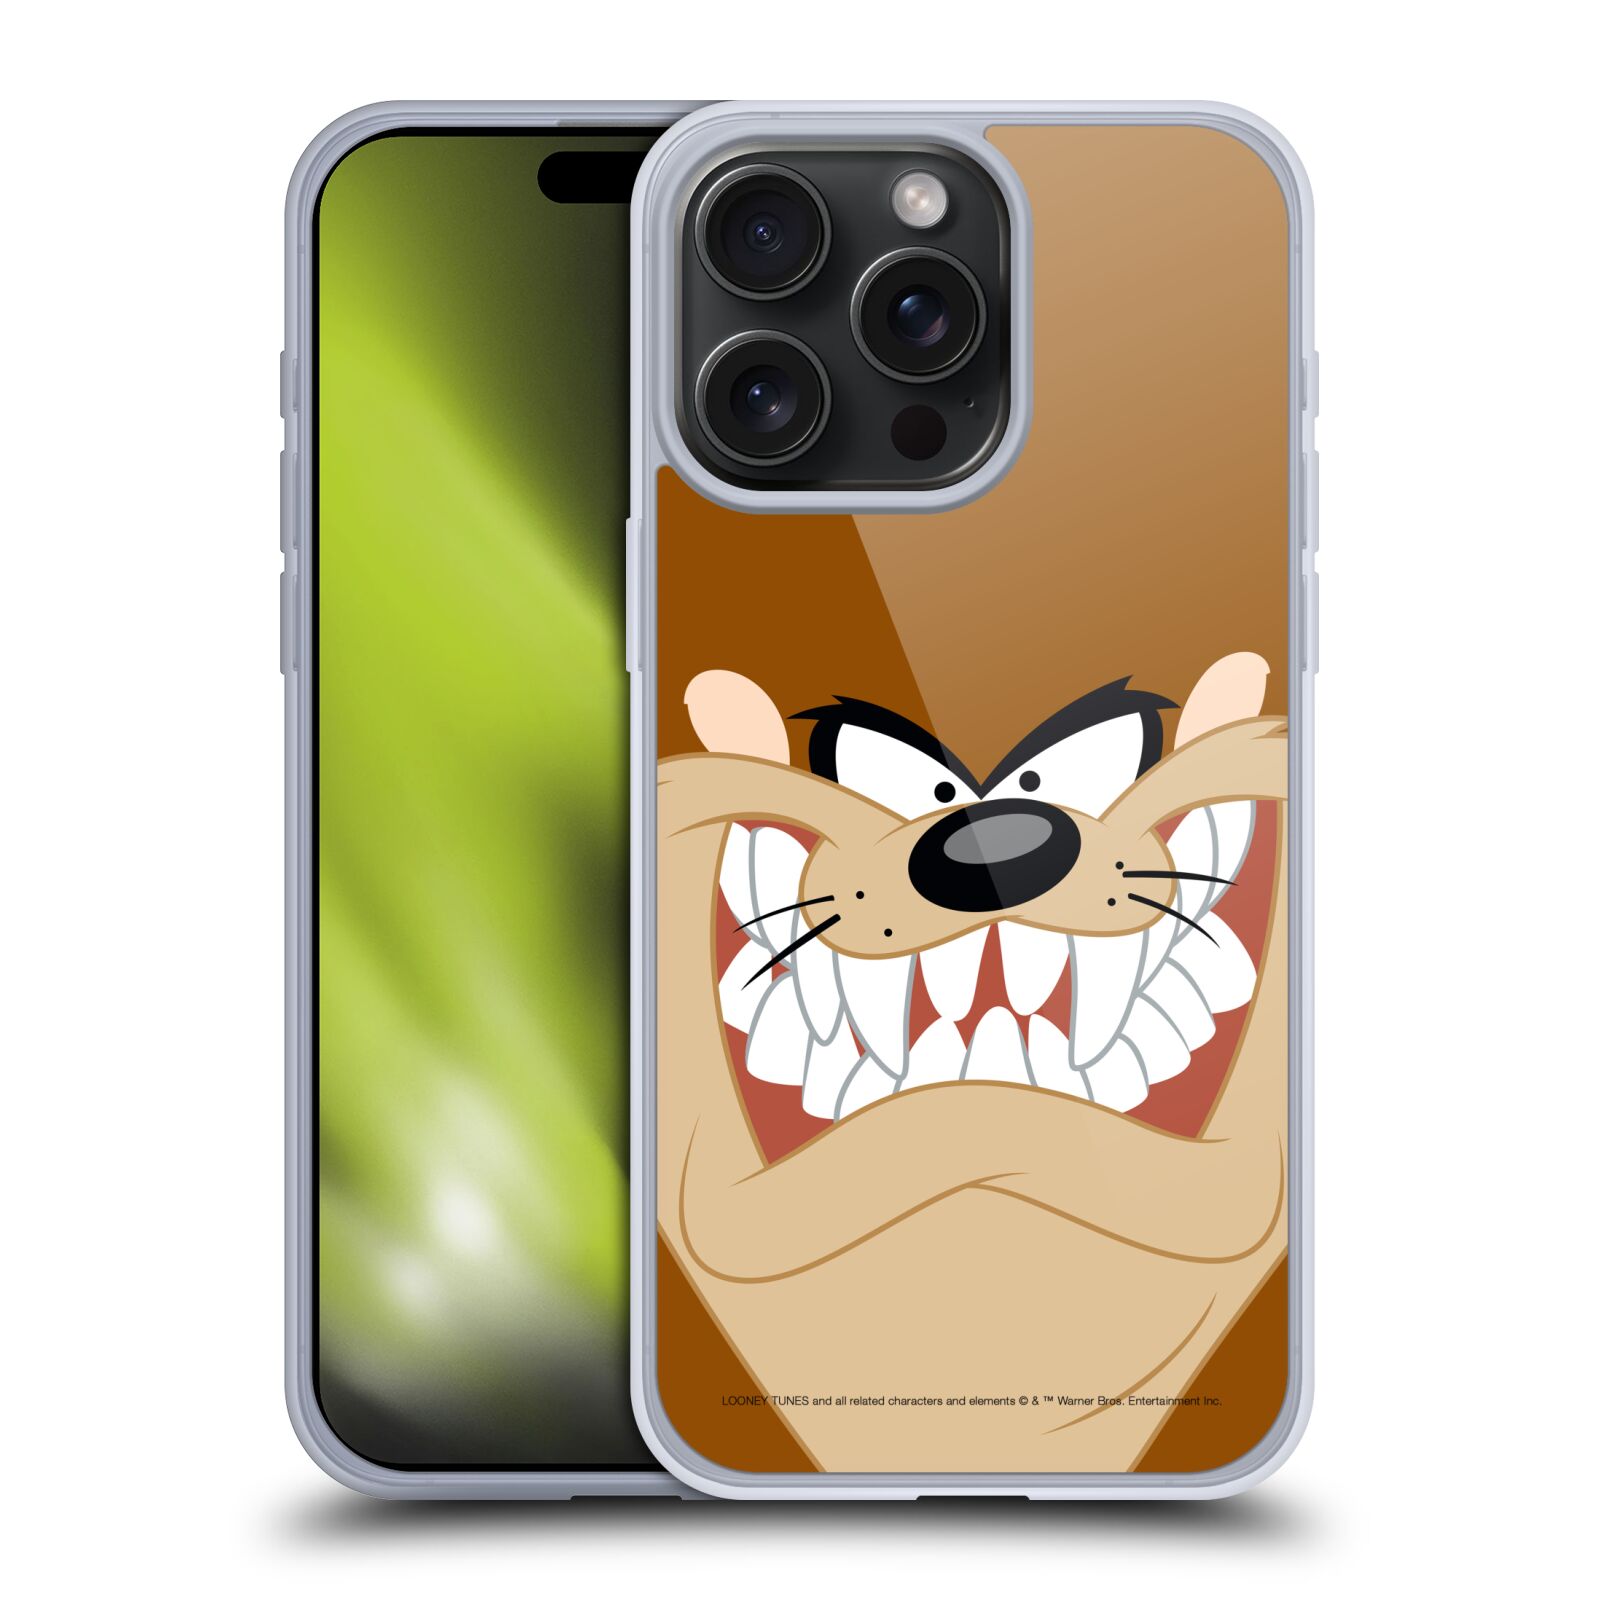 Silikonové lesklé pouzdro na mobil Apple iPhone 15 Pro Max - Looney Tunes - Tasmanian Devil - Tasmánský Čert (Silikonový lesklý kryt, obal, pouzdro na mobilní telefon Apple iPhone 15 Pro Max s licencovaným motivem Looney Tunes - Tasmanian Devil - Tasmánsk